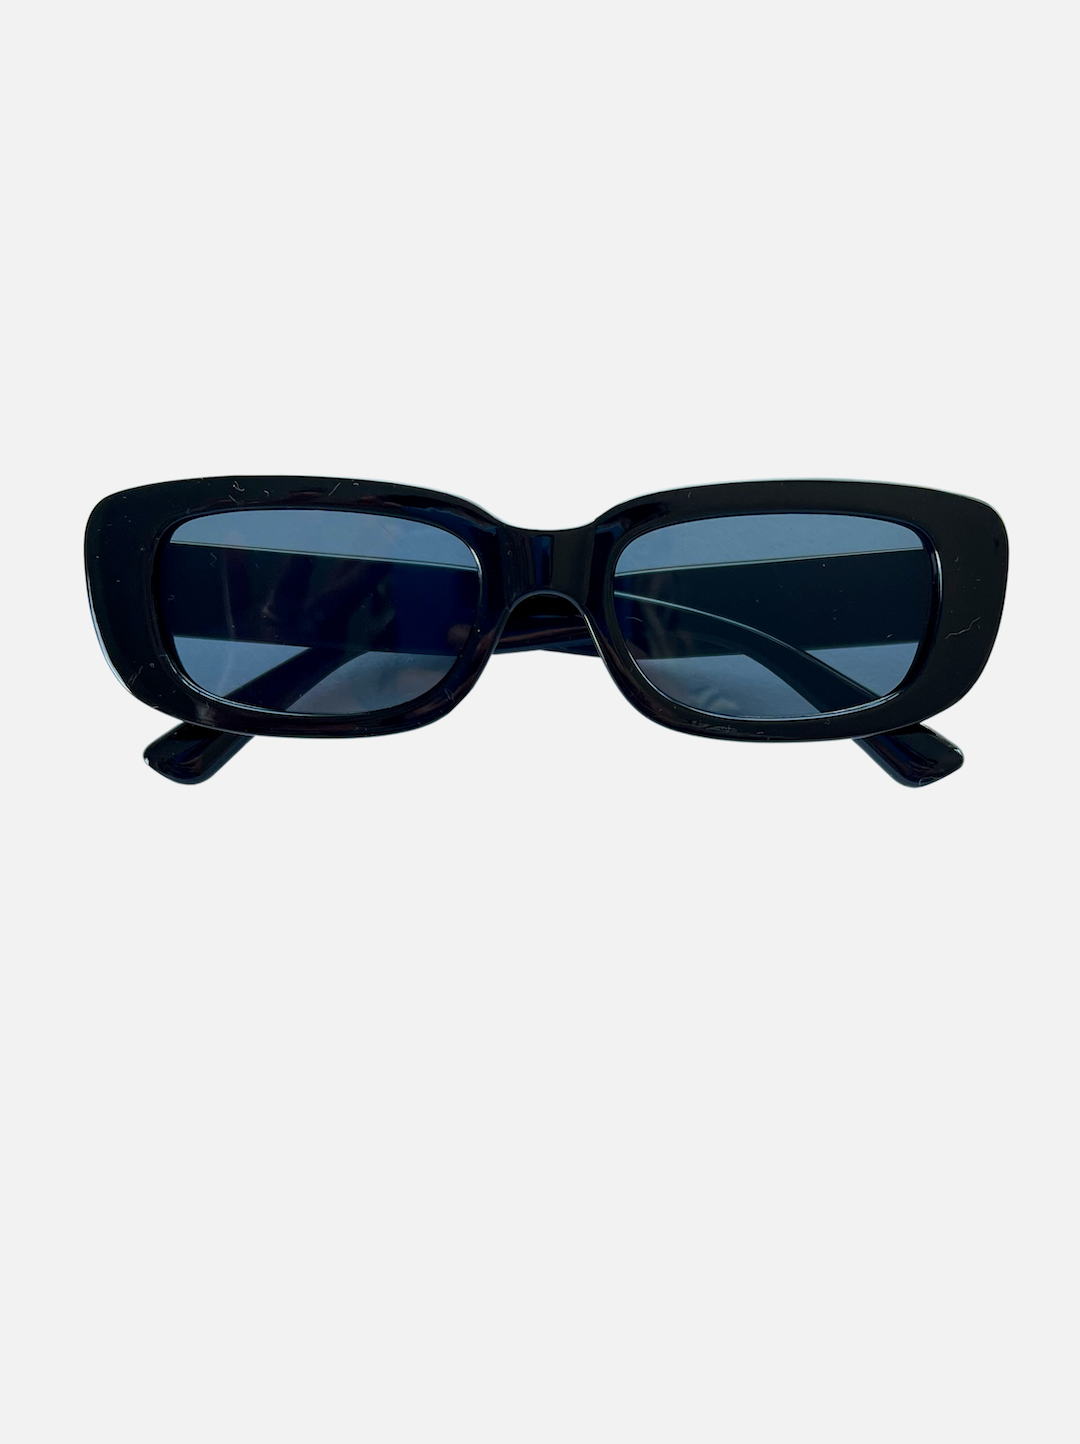 A pair of kids' sunglasses with blue lenses inside black frames